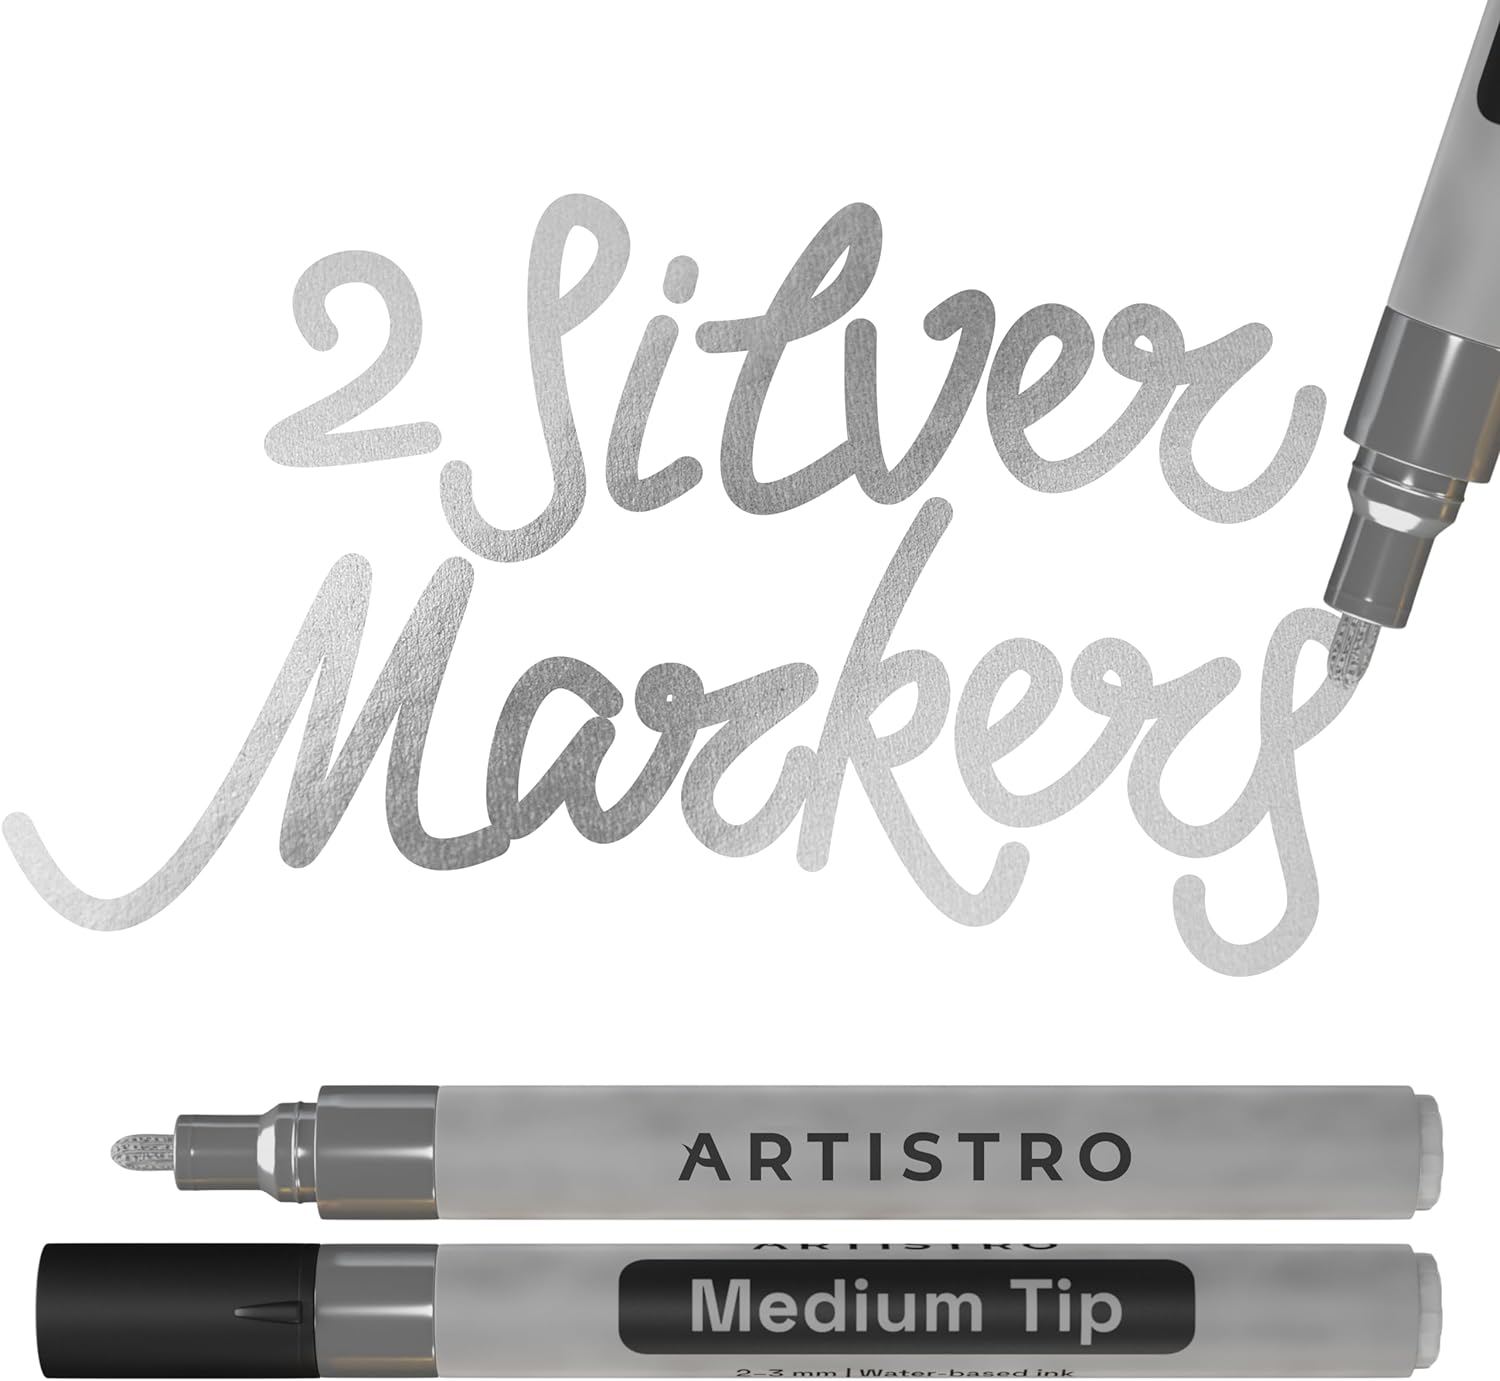 White Paint Pen for Art- 8 Pack Acrylic White Paint Markers 2-3Mm Medium  Tip for